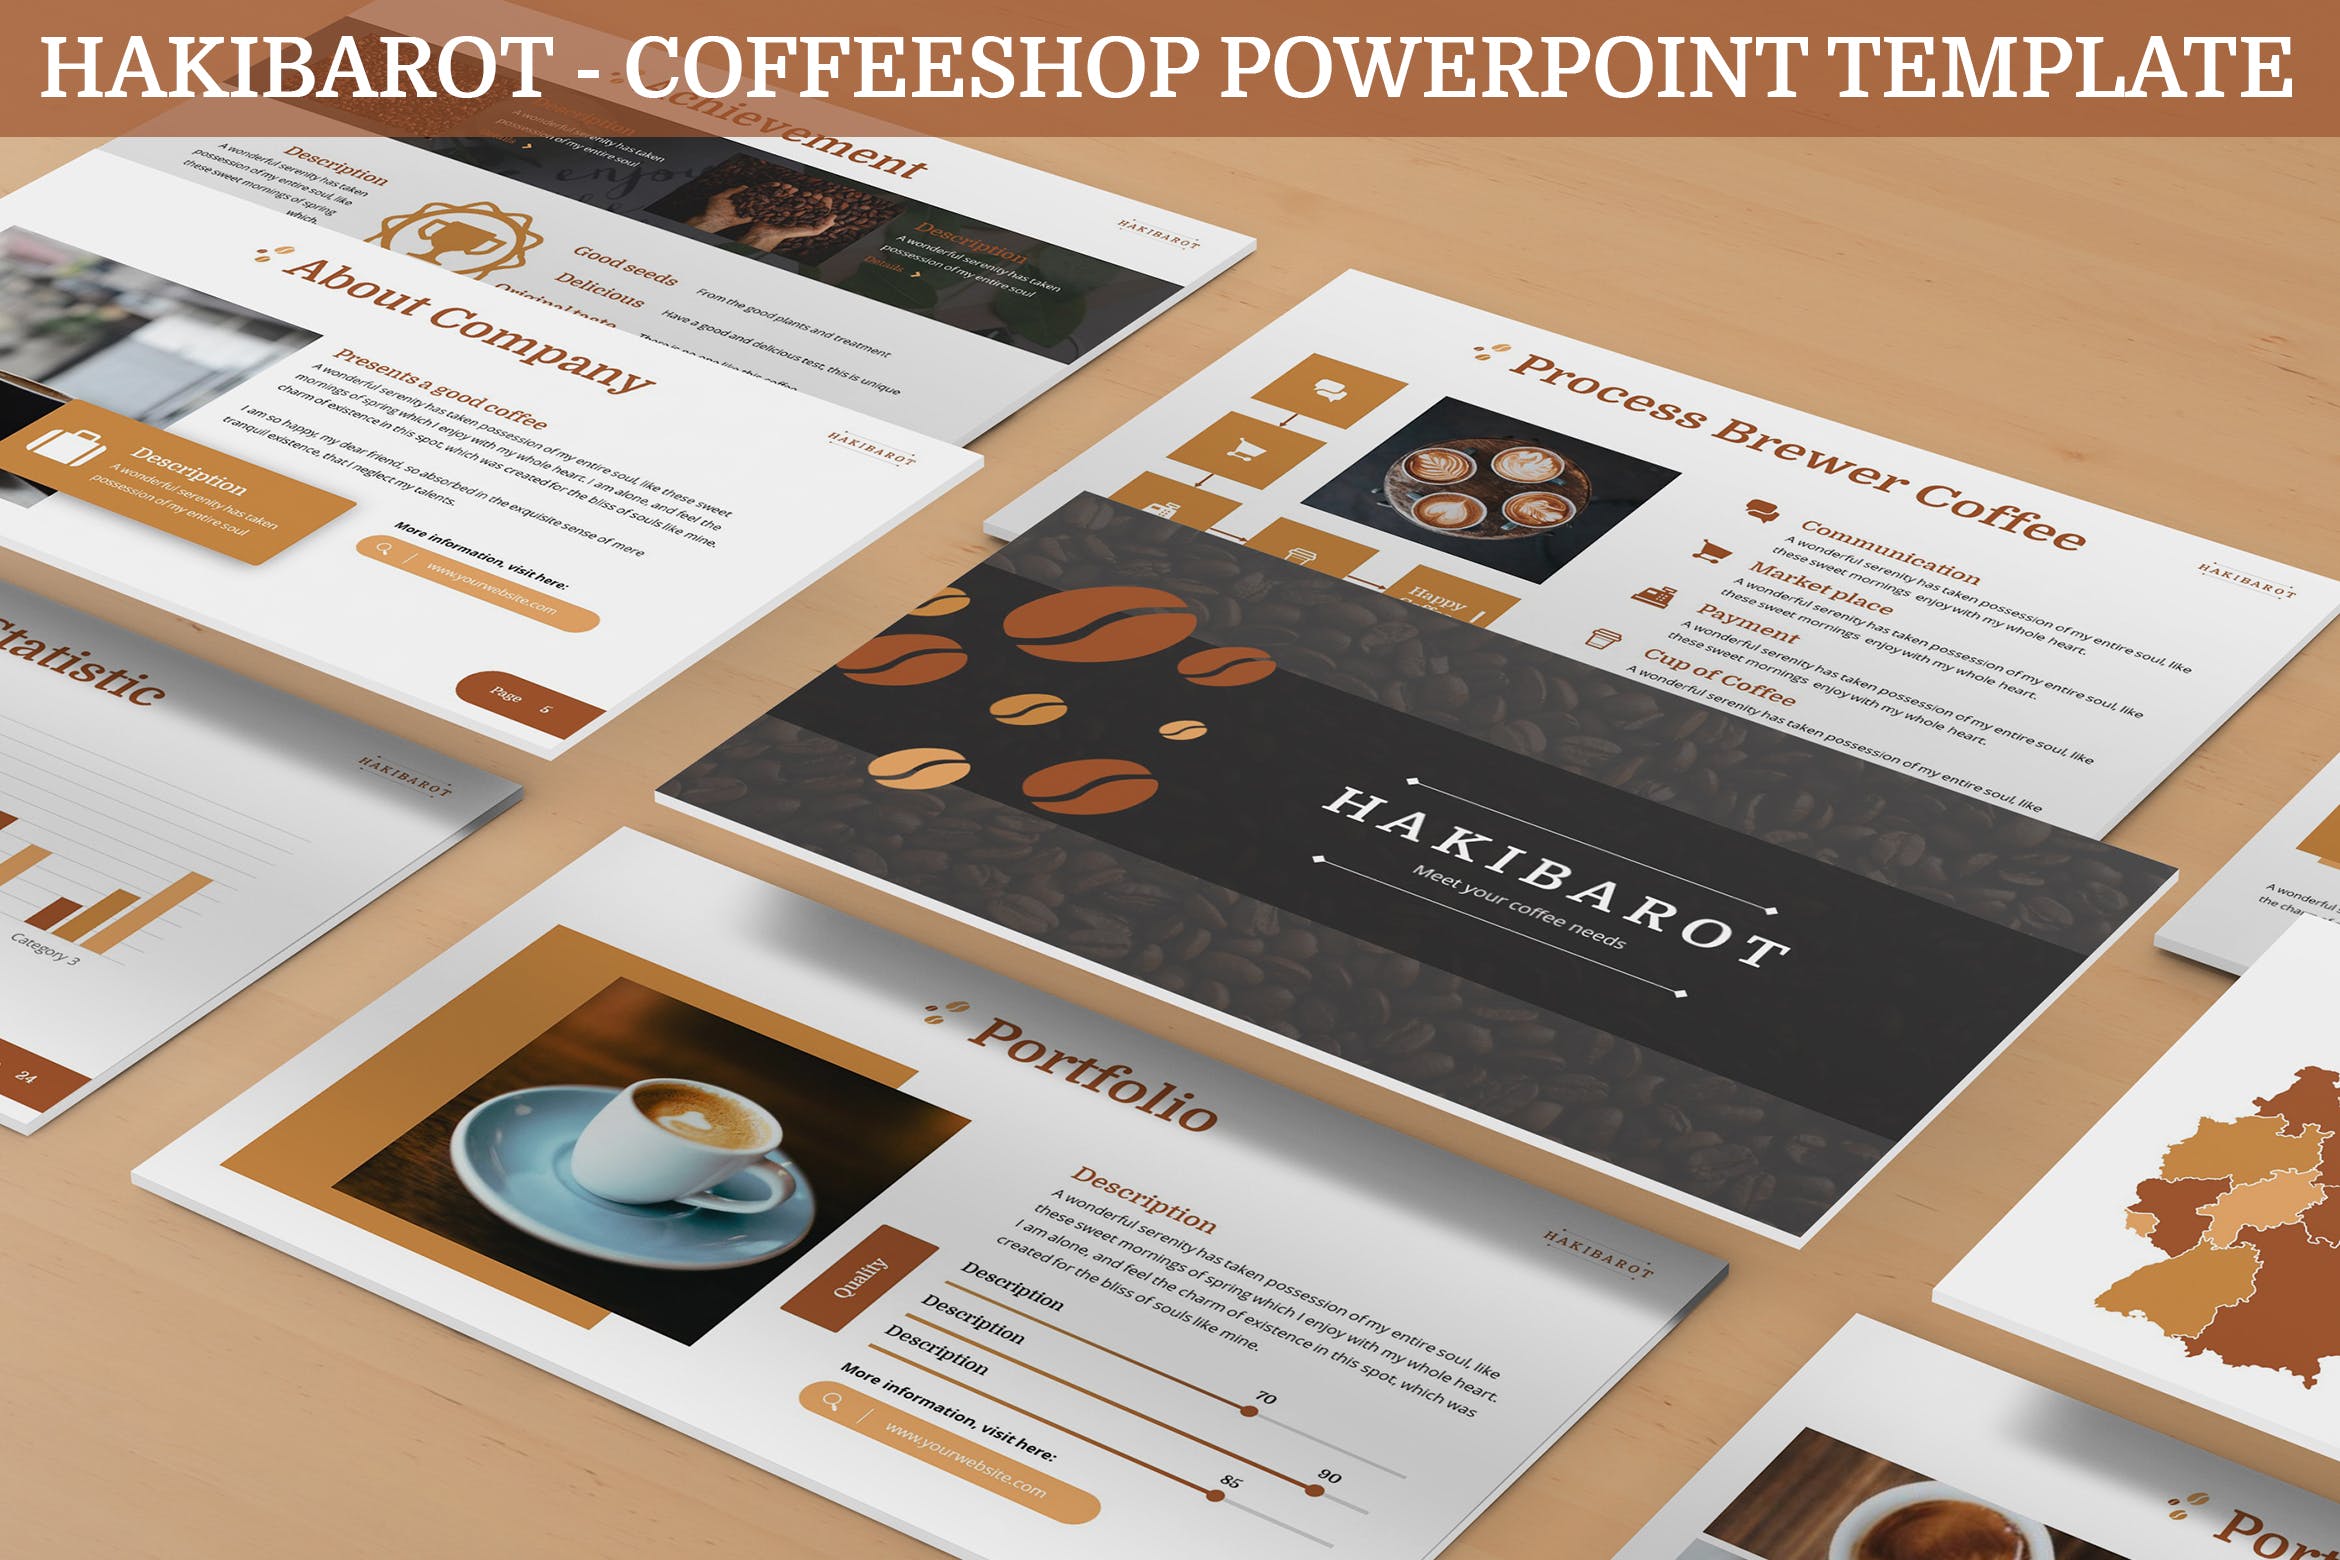 咖啡店创业策划方案PPT模板素材 Hakibarot – Coffeeshop Powerpoint Template插图